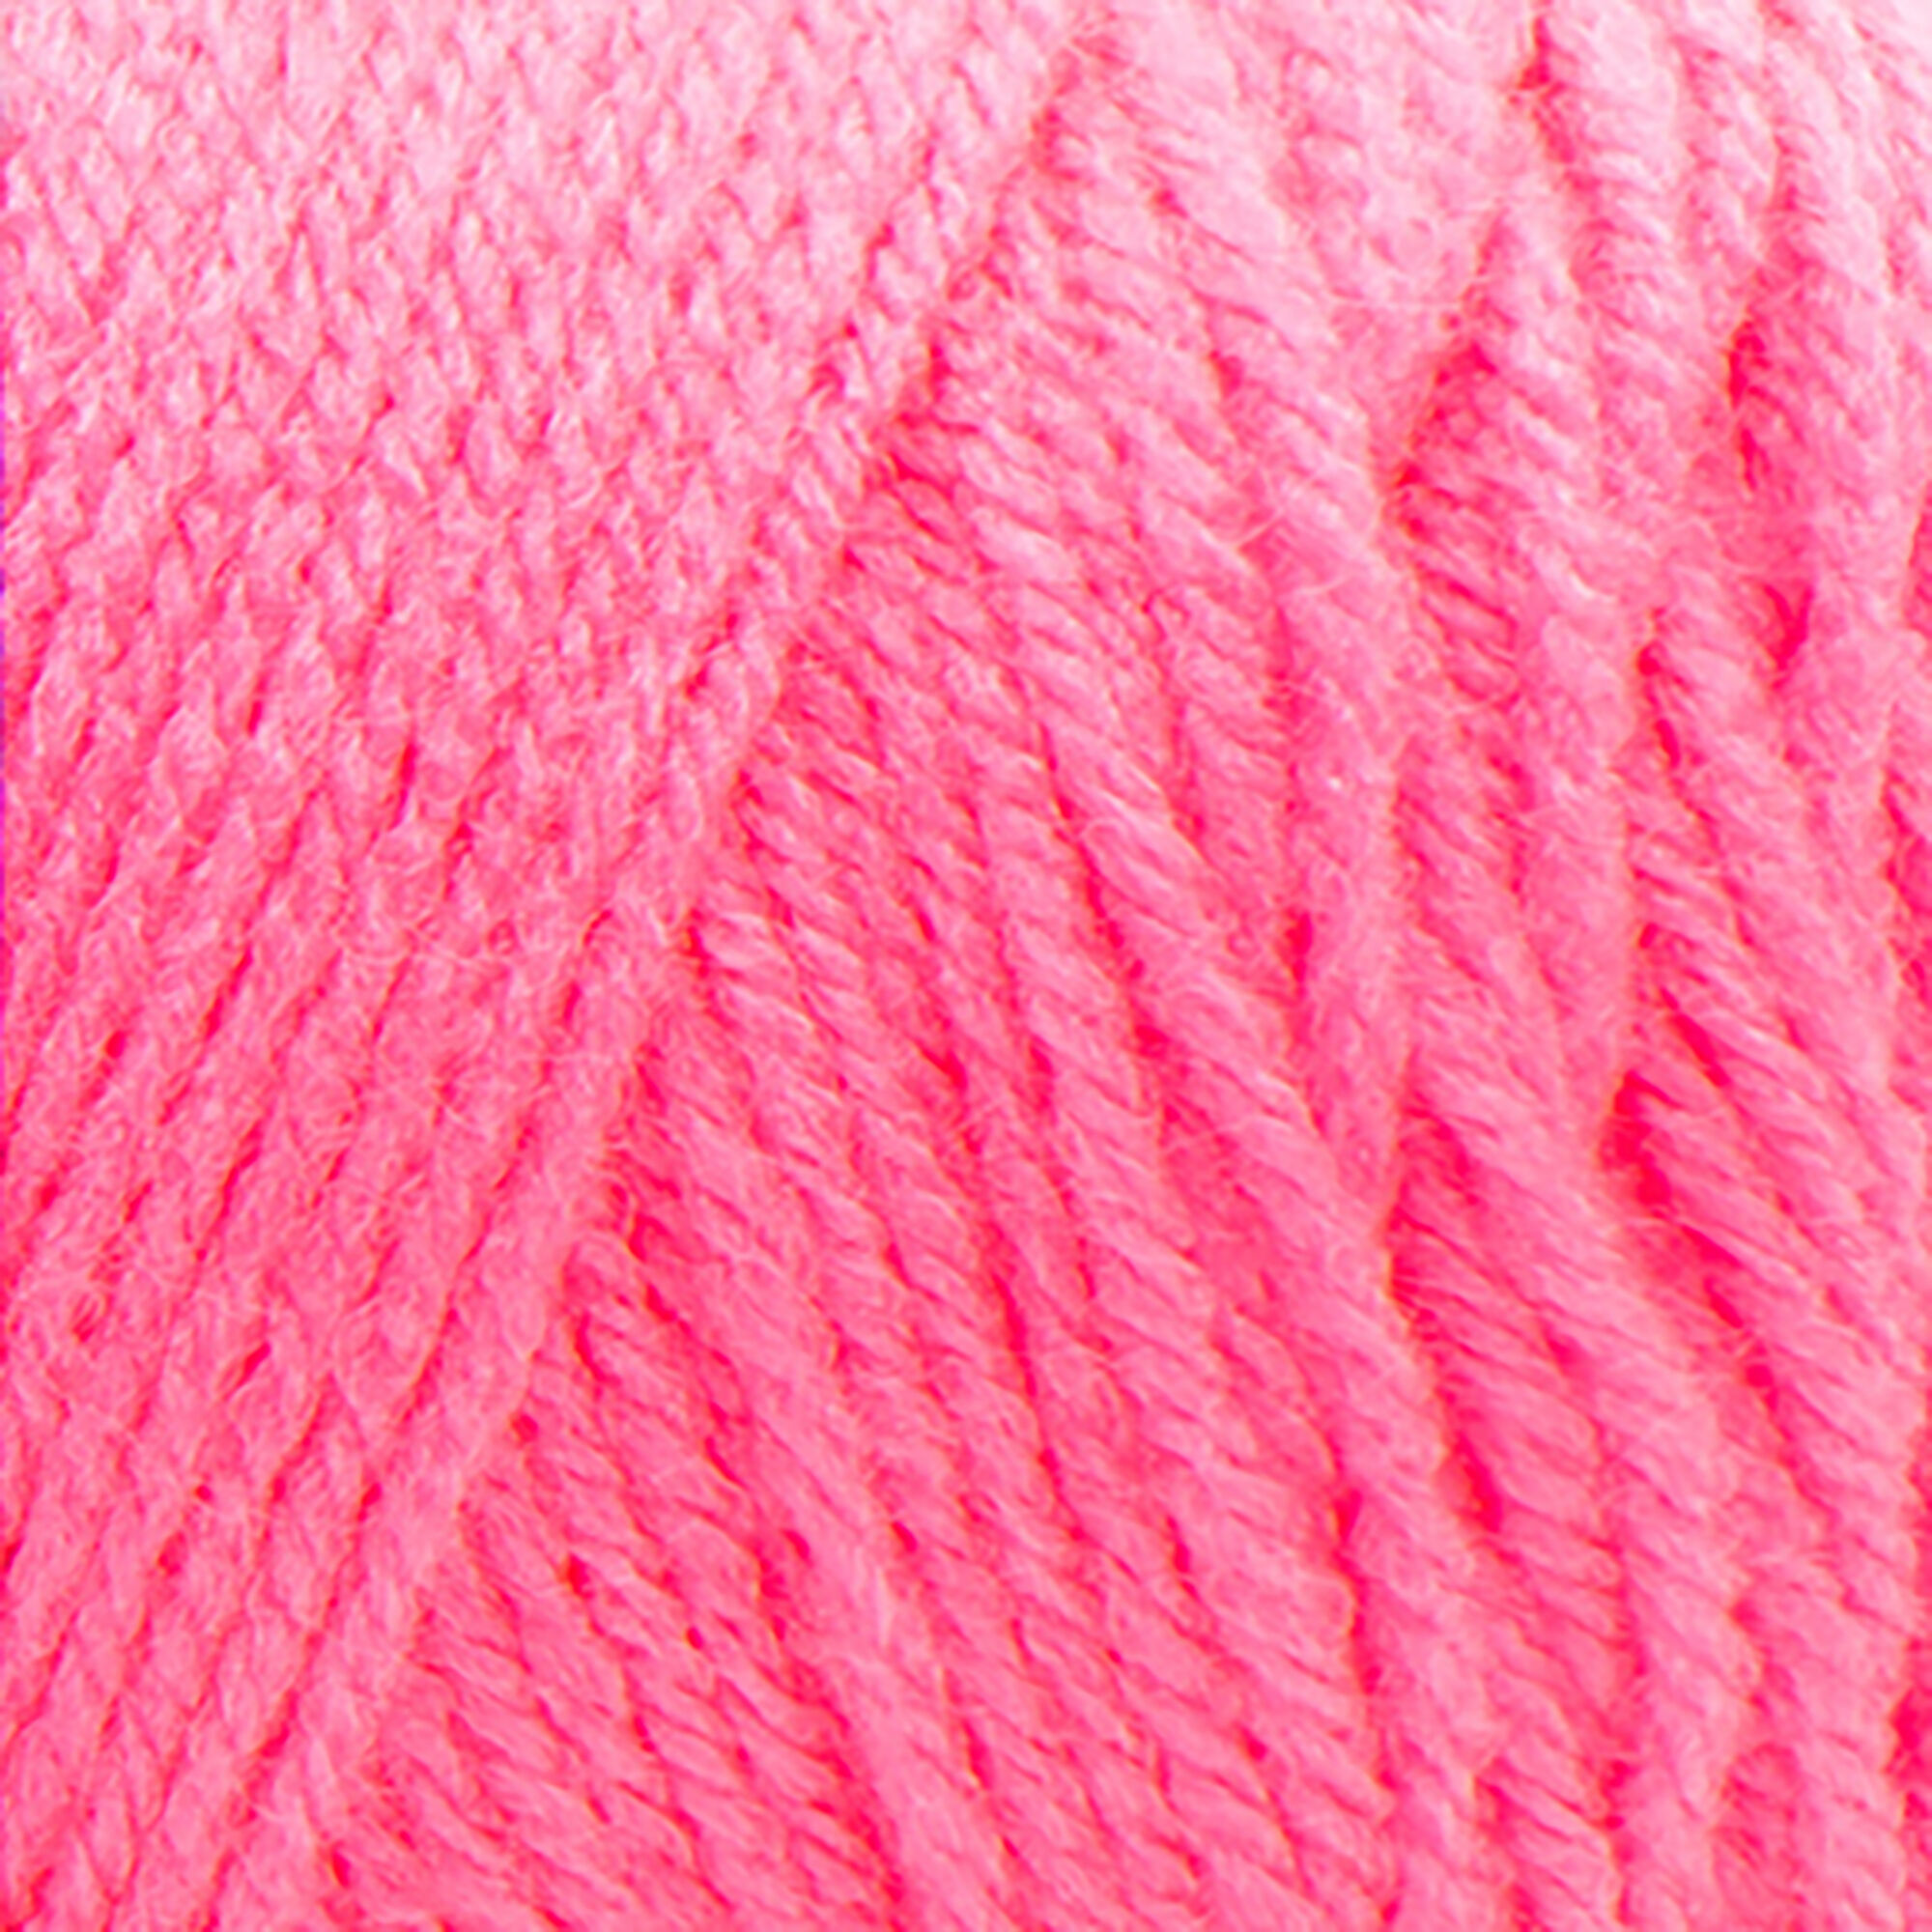 Red Heart Super Saver Medium Acrylic Pink Yarn, 364 yd - image 3 of 18